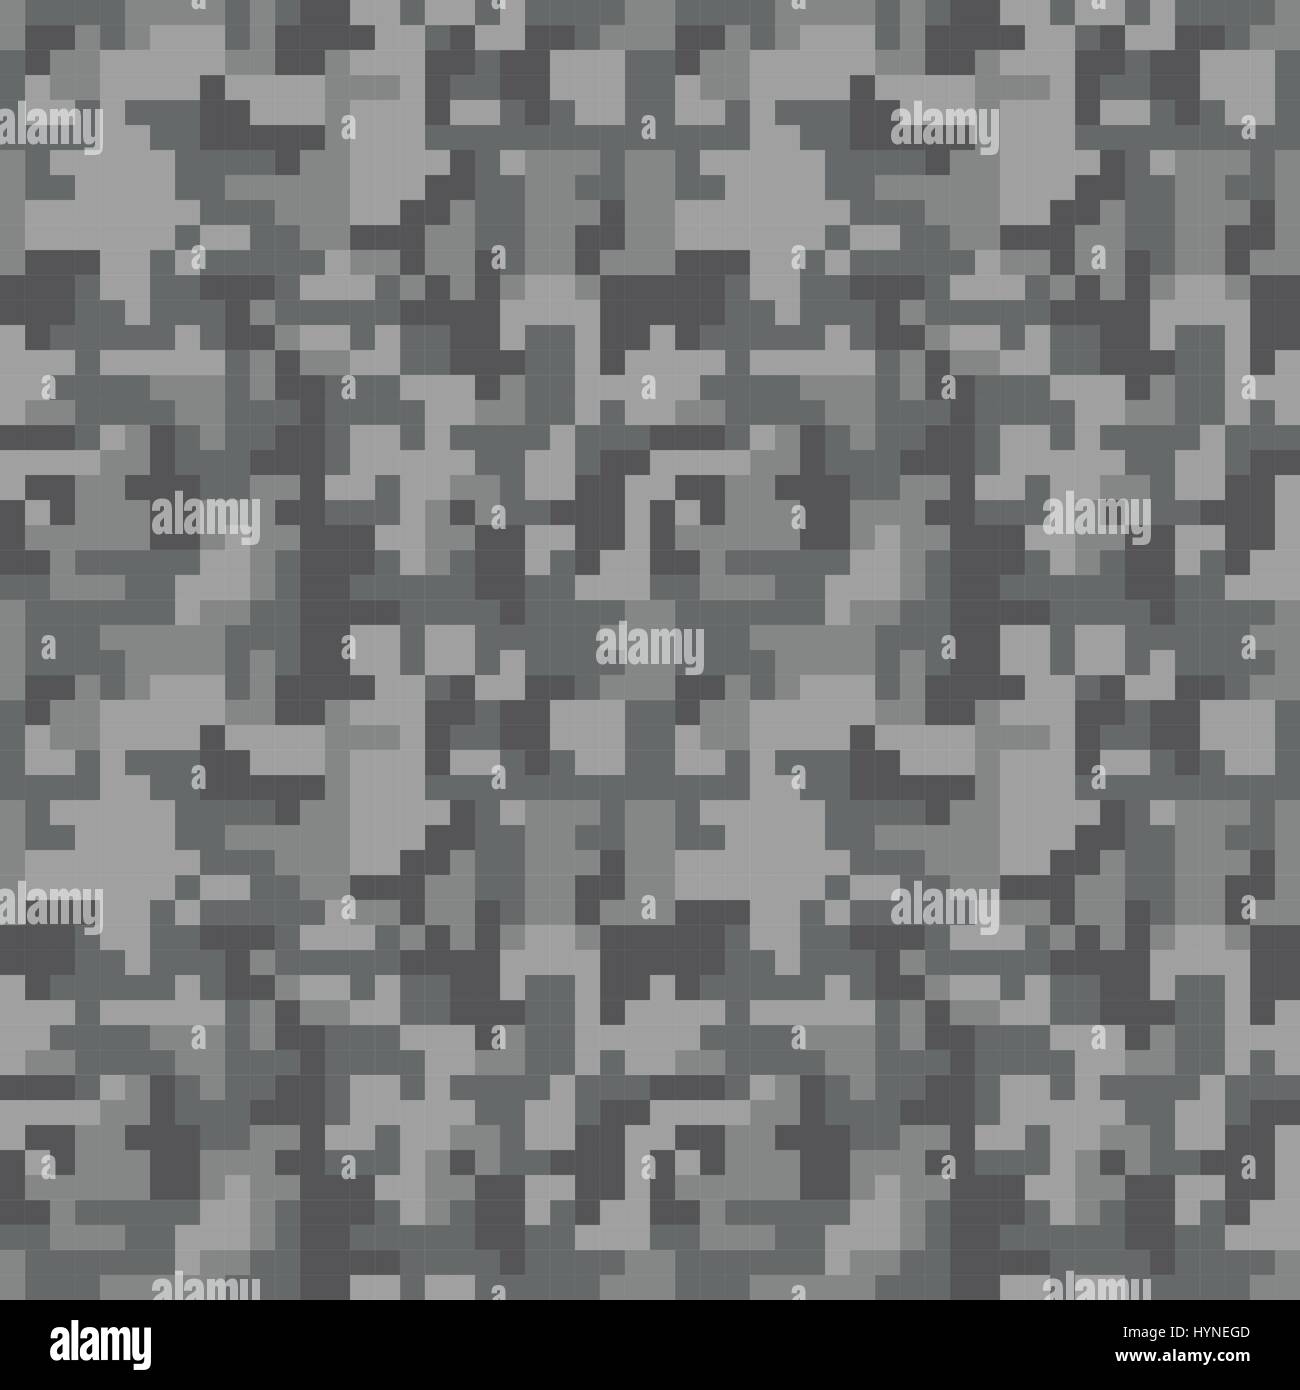 https://c8.alamy.com/comp/HYNEGD/pixel-camo-seamless-pattern-grey-urban-camouflage-HYNEGD.jpg